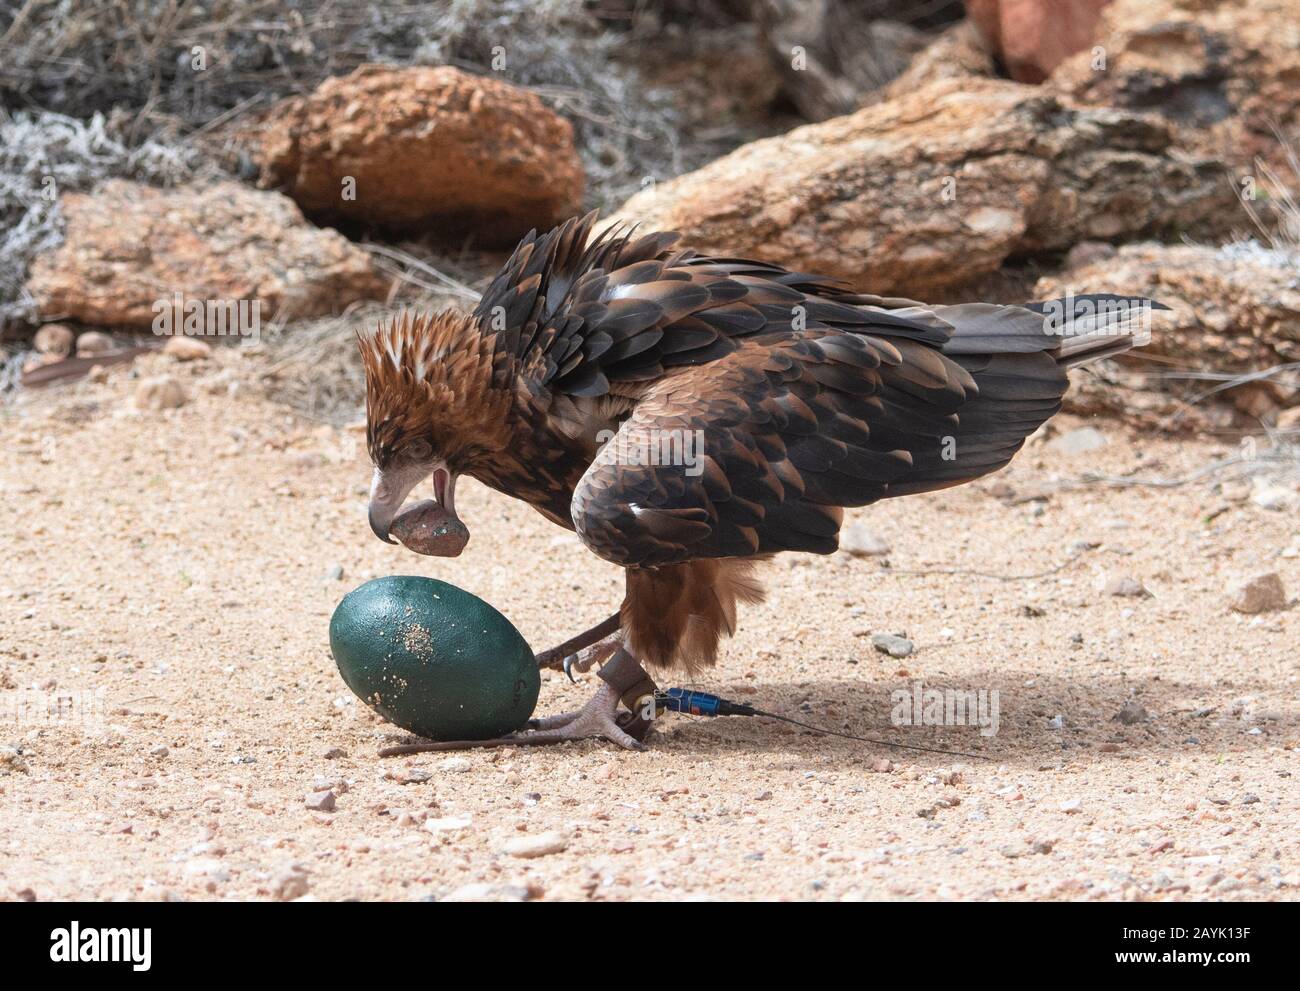 A Black-breasted Buzzard (Hamirostra melanosternon) uses a stone as a tool to break a fake emu egg during a bird display in Australia Stock Photo